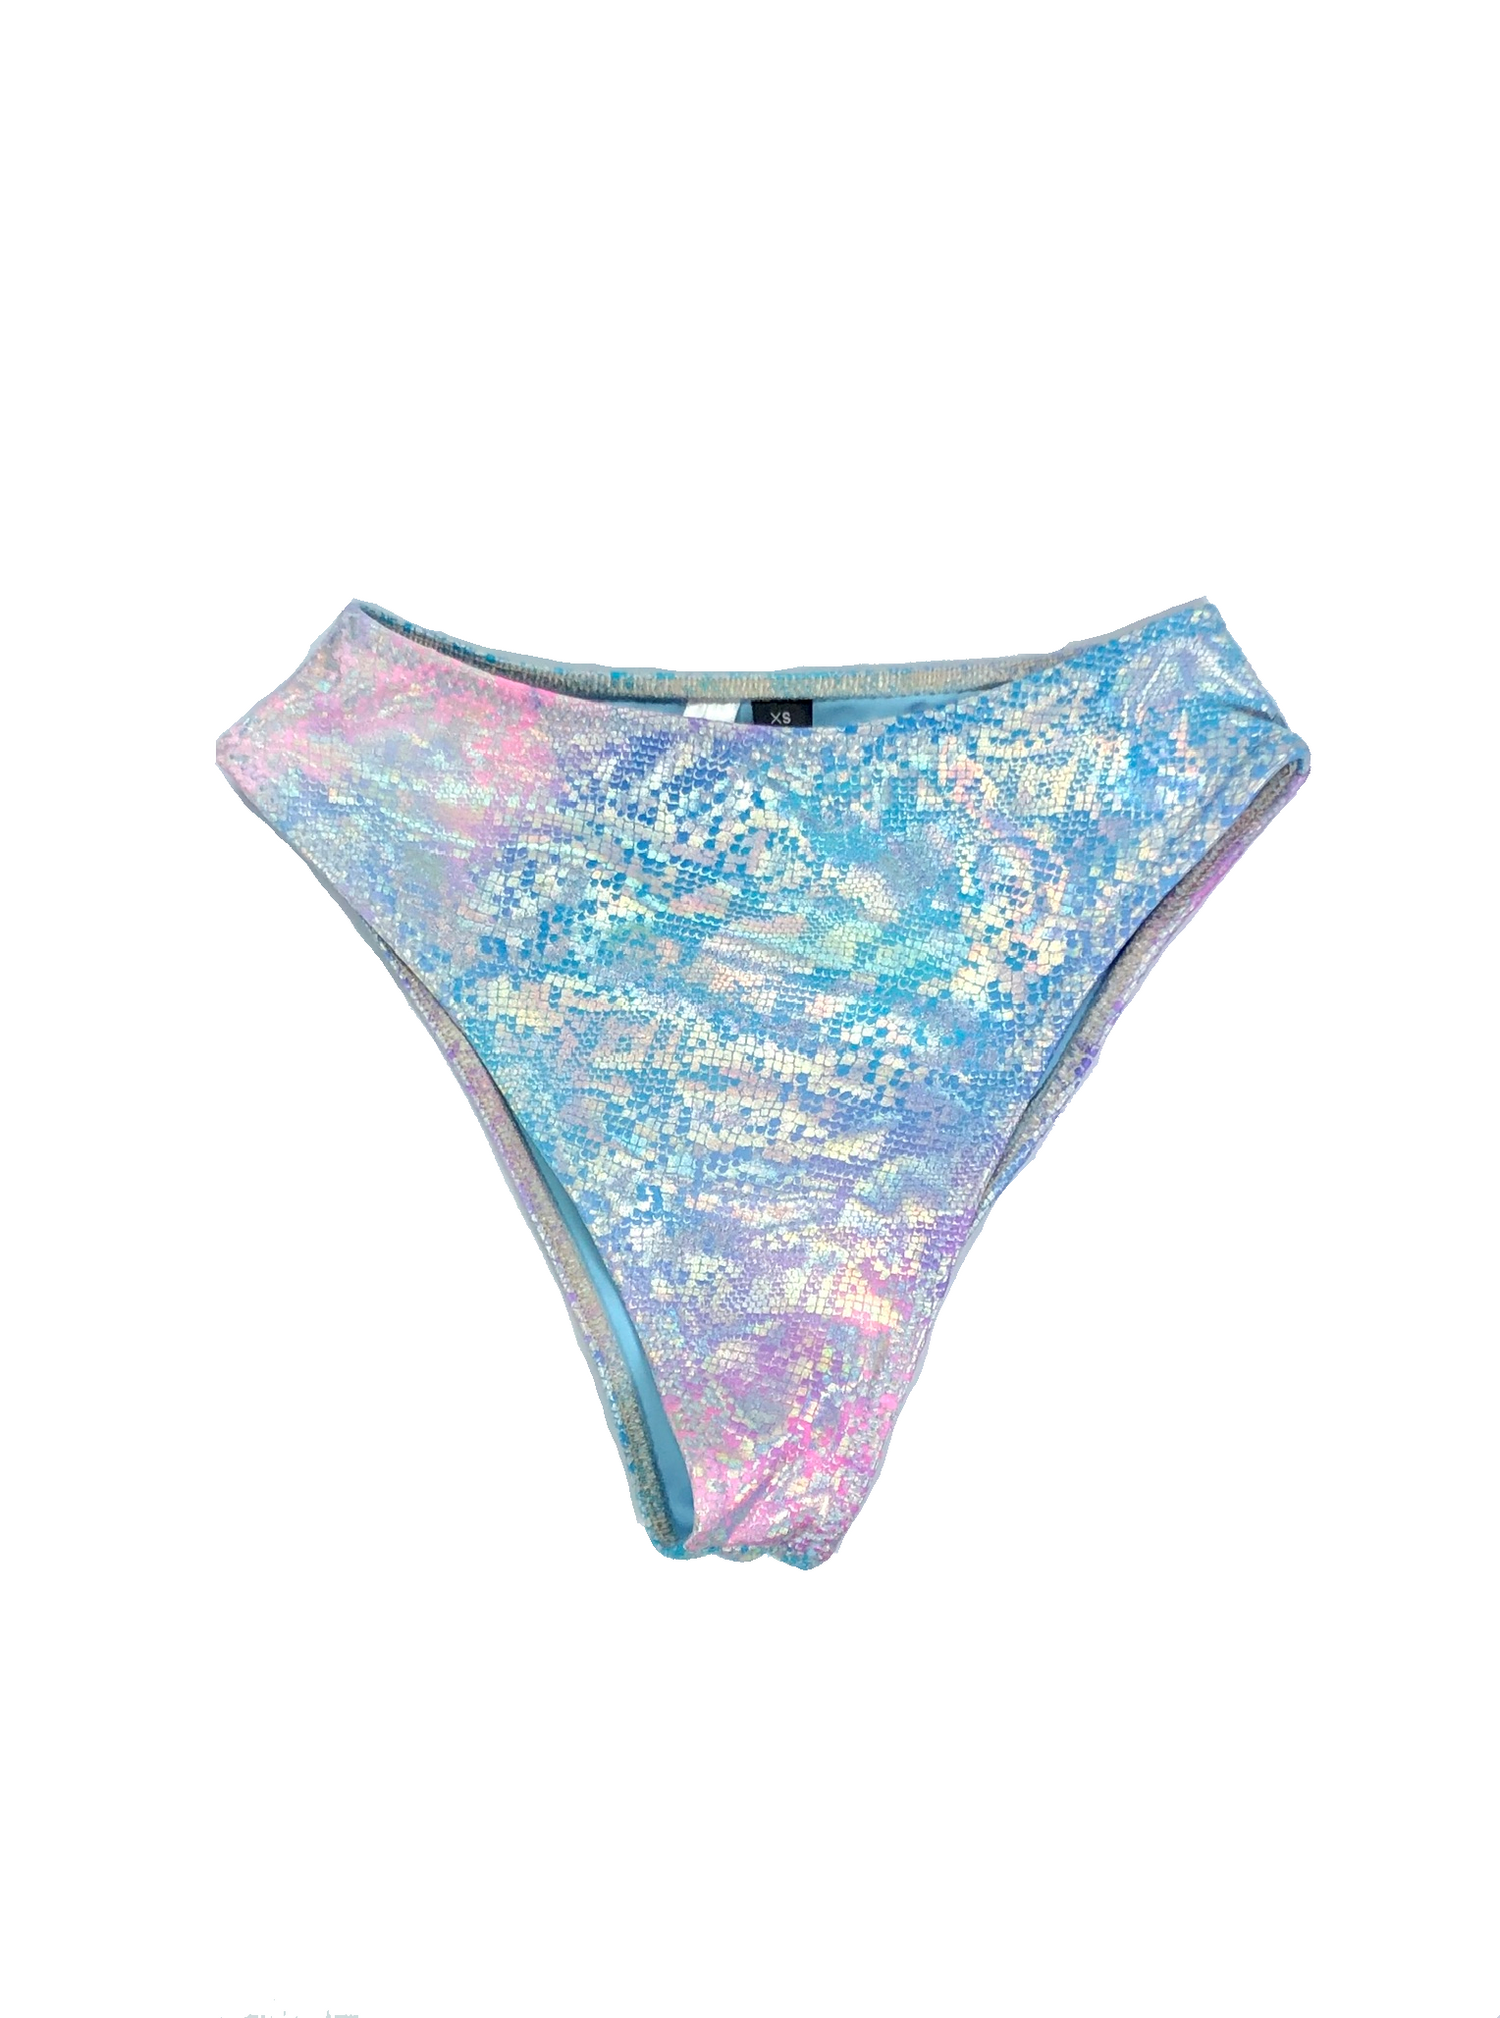 wendolin-designs - Wendolin Designs - Bikini bottom - Bikini Bottom High Waist Color Holographic